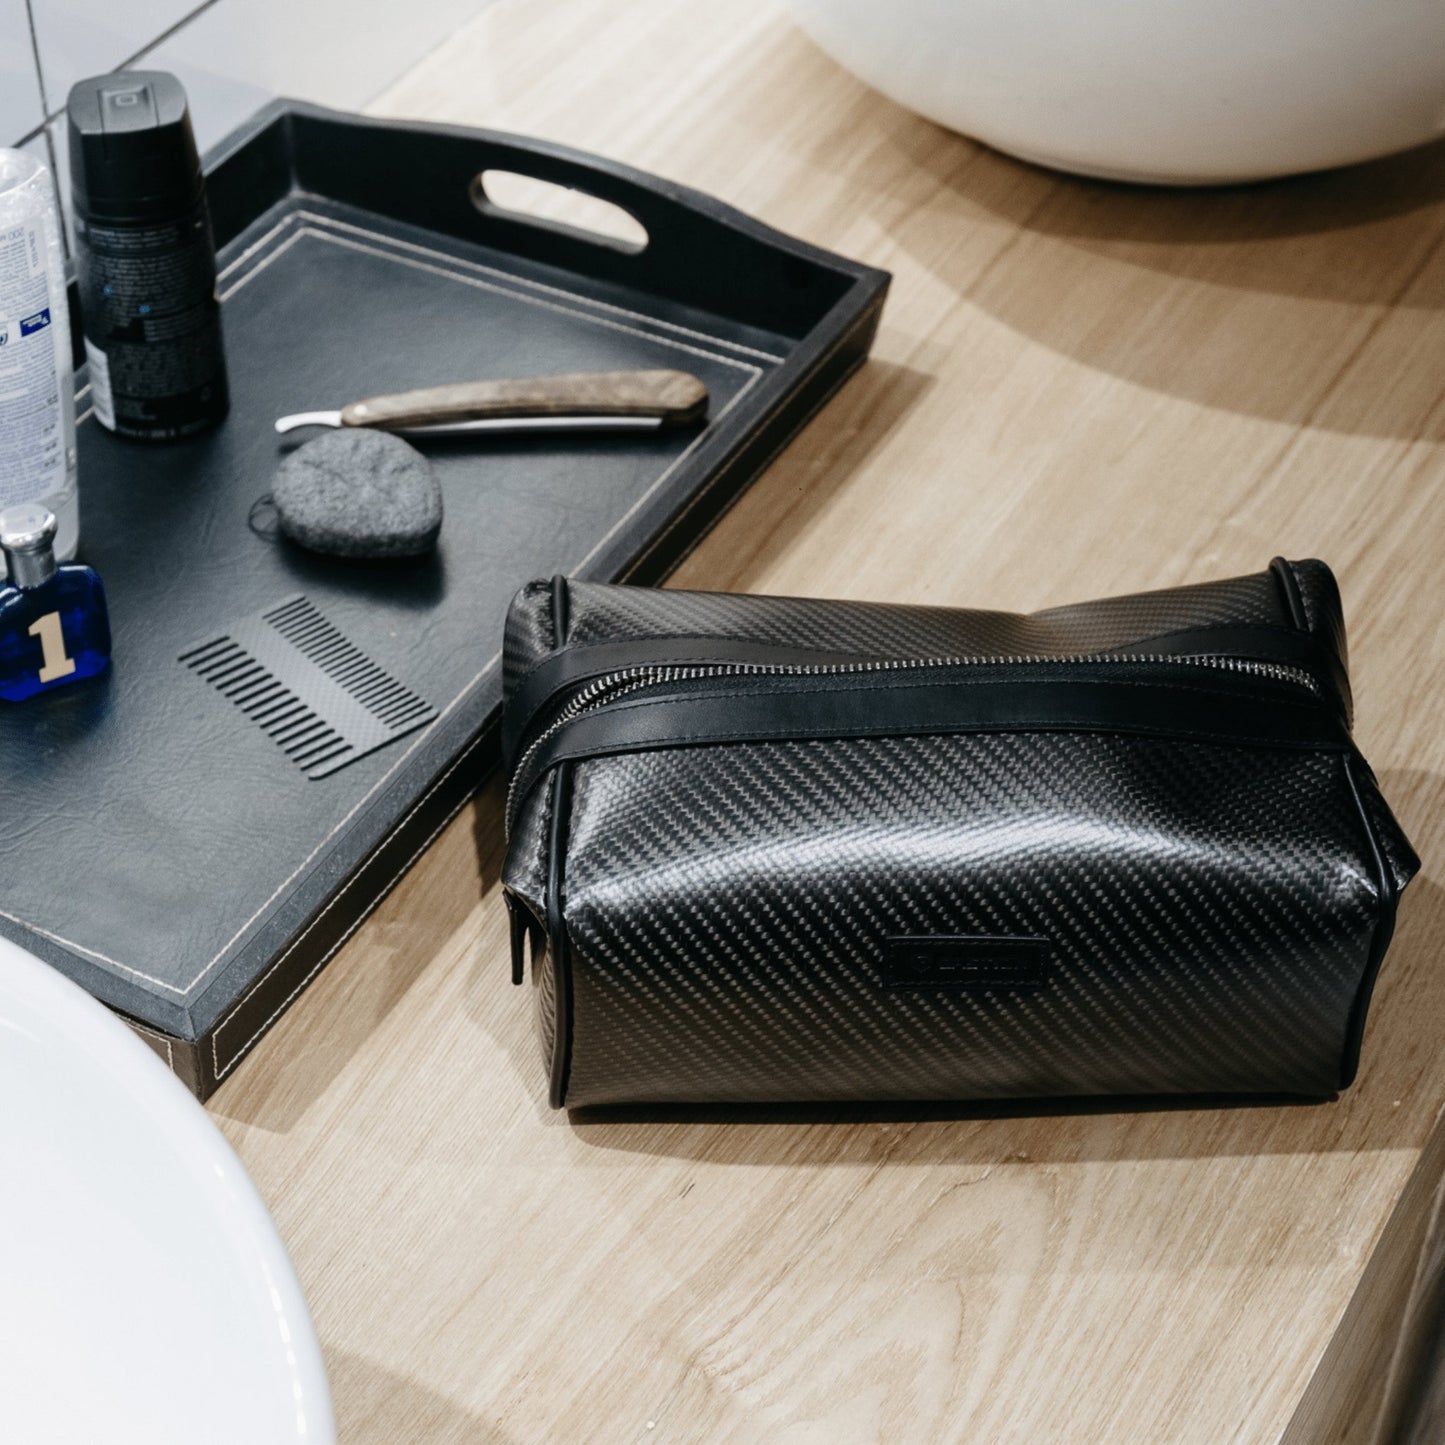 CARBONITE - Carbon Fiber Duffel Bag & Luggage Set by Bastion® - Bastion Bolt Action Pen